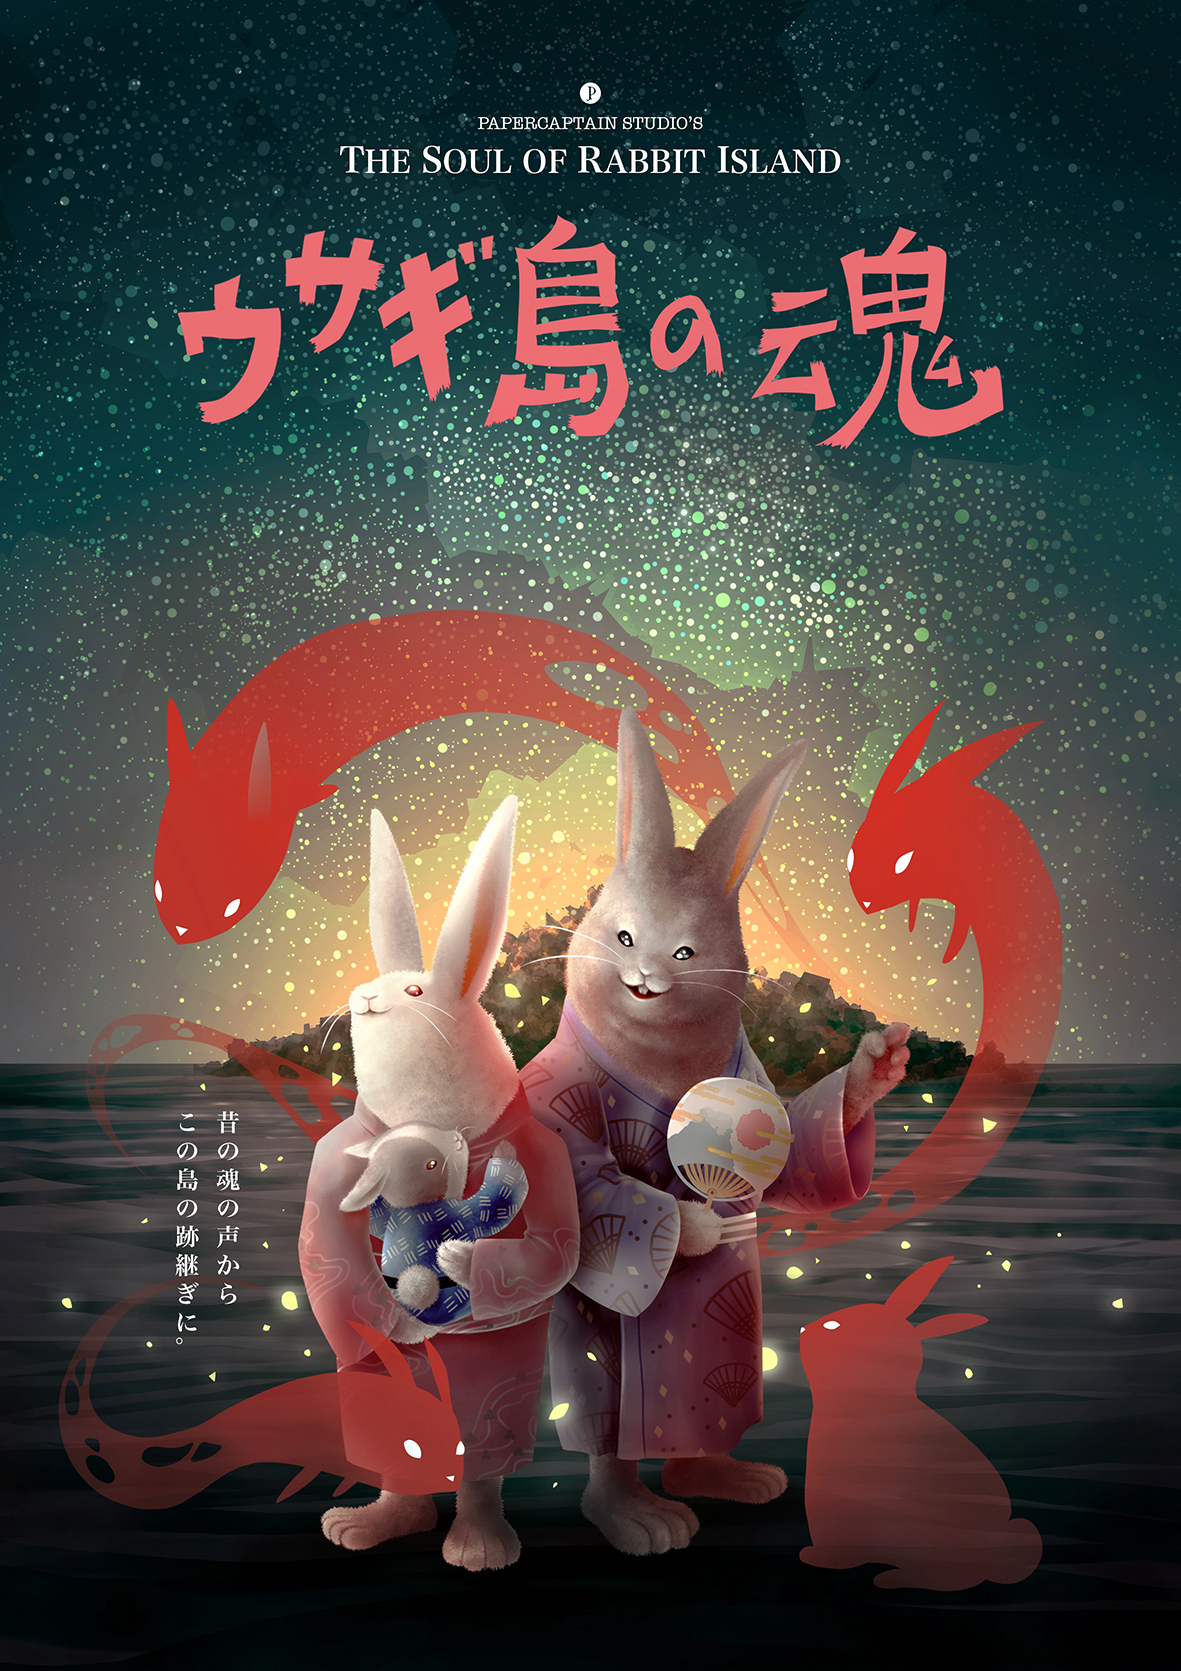 Usagi JIma Rabbit island Okunoshima japan japanese art Japanese Animation japanese folklore Japanese book children book Picture book papercaptain children illustration Ps25Under25